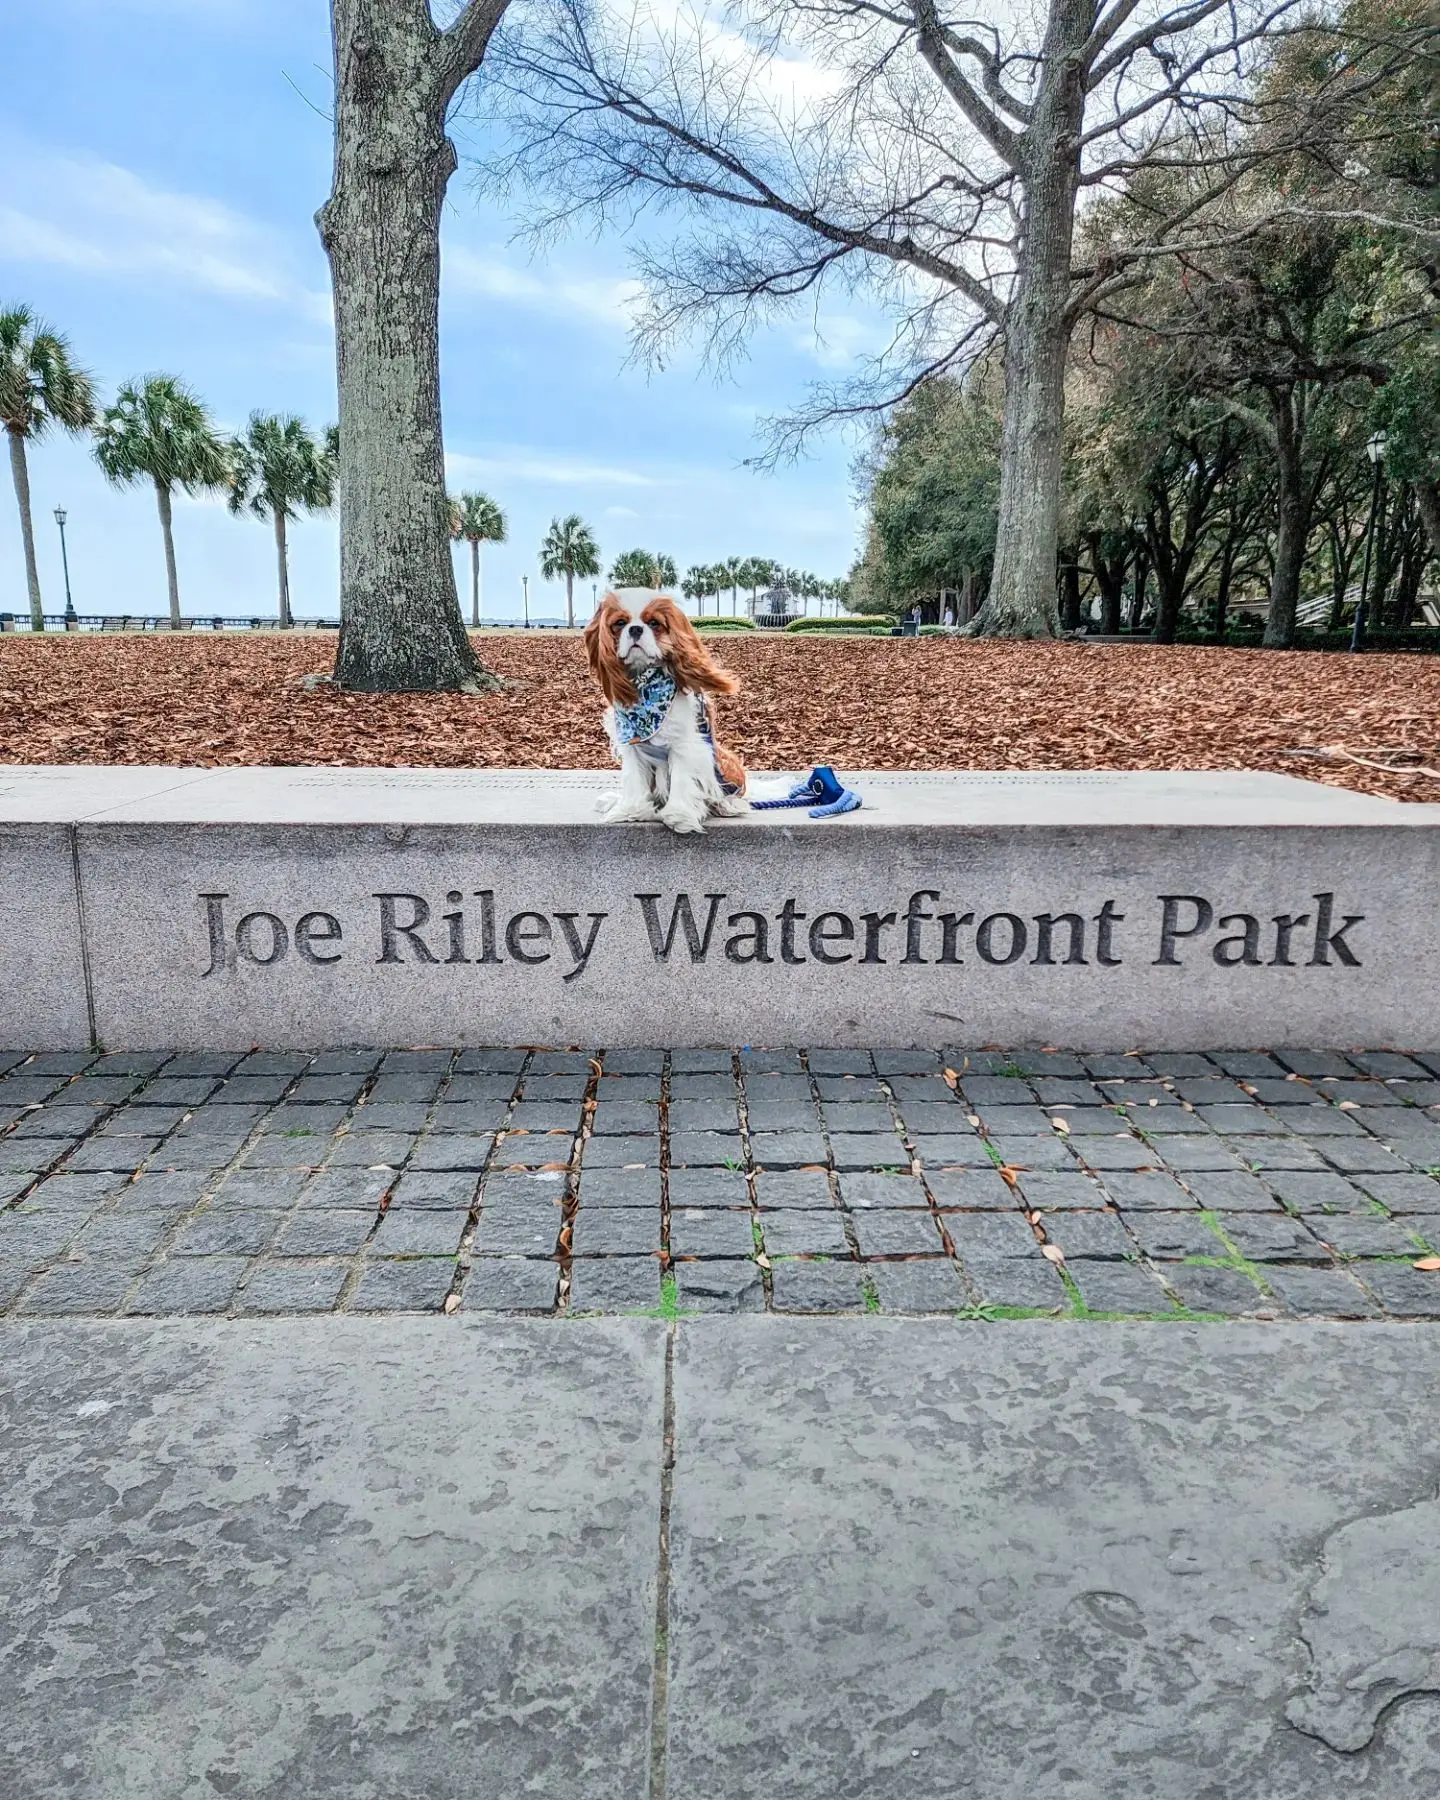 Joe Riley Waterfront Park Address